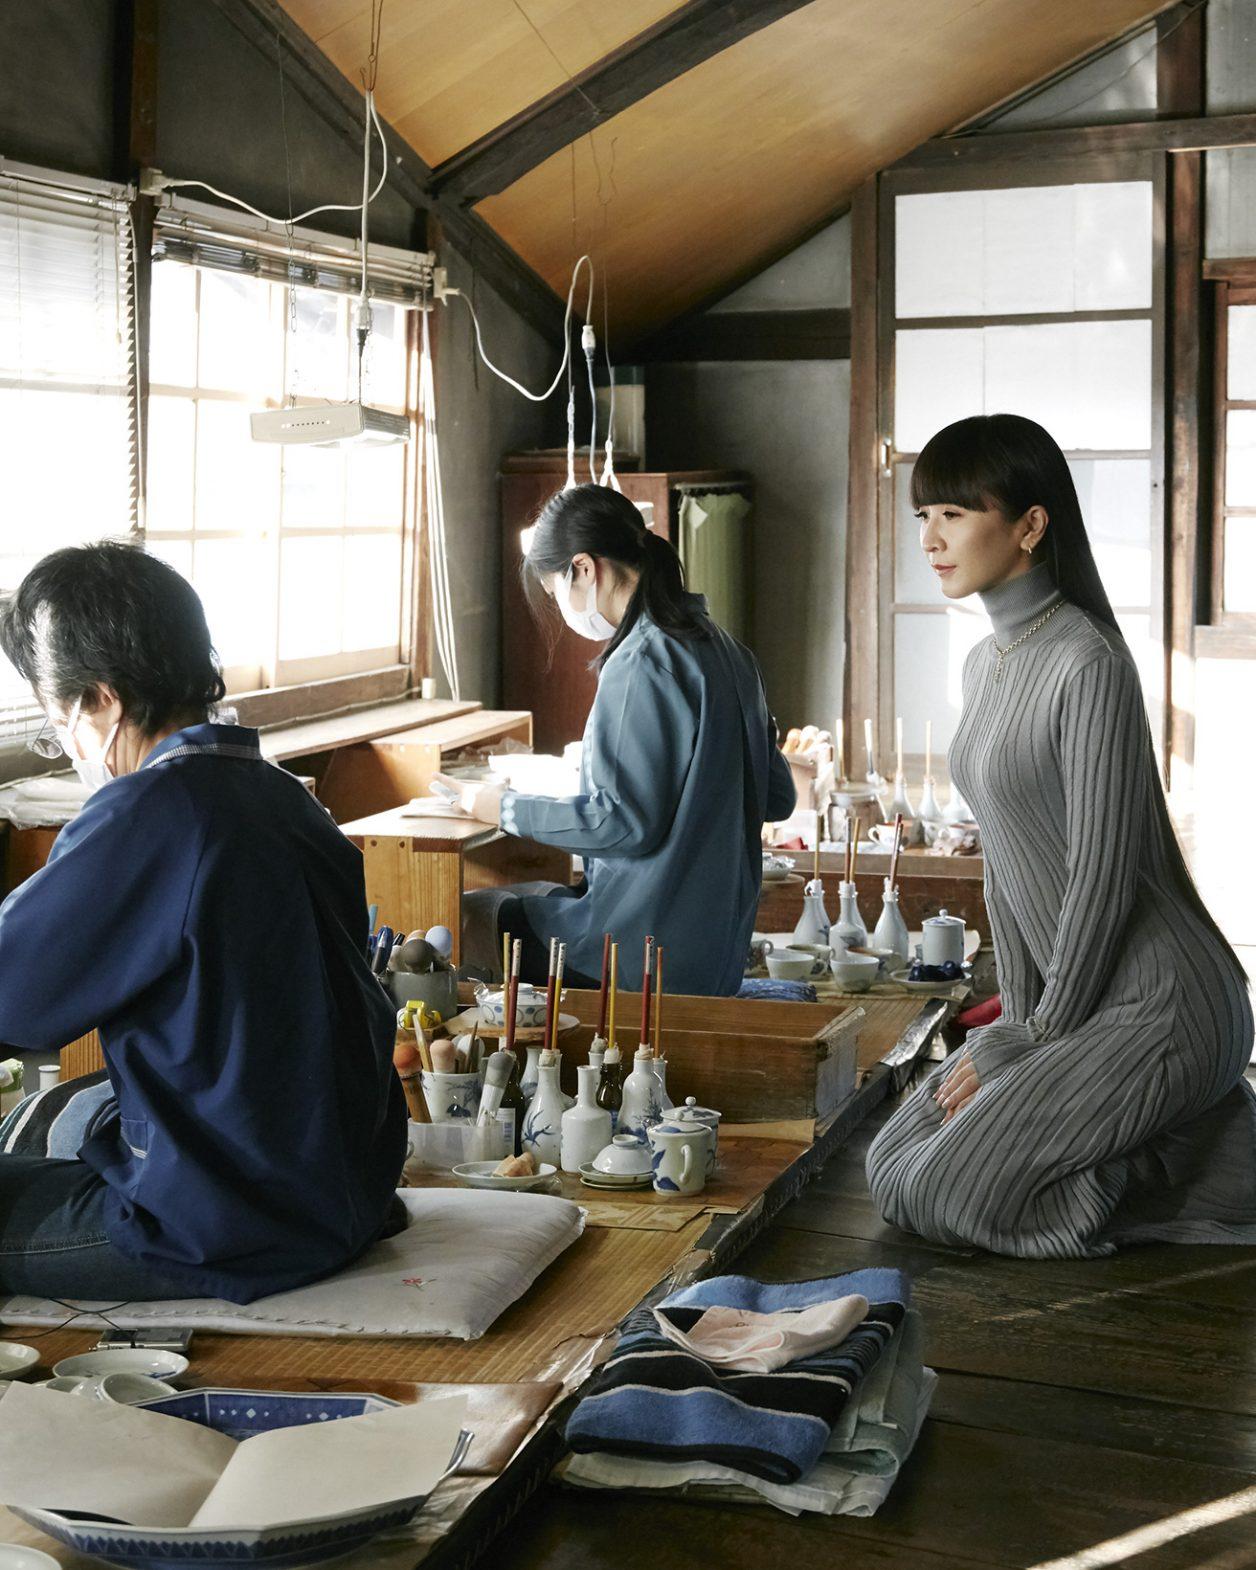 Kokontozai: KASHIYUKA’s Shop of Japanese Arts and Crafts /[ARITA PORCELAIN]